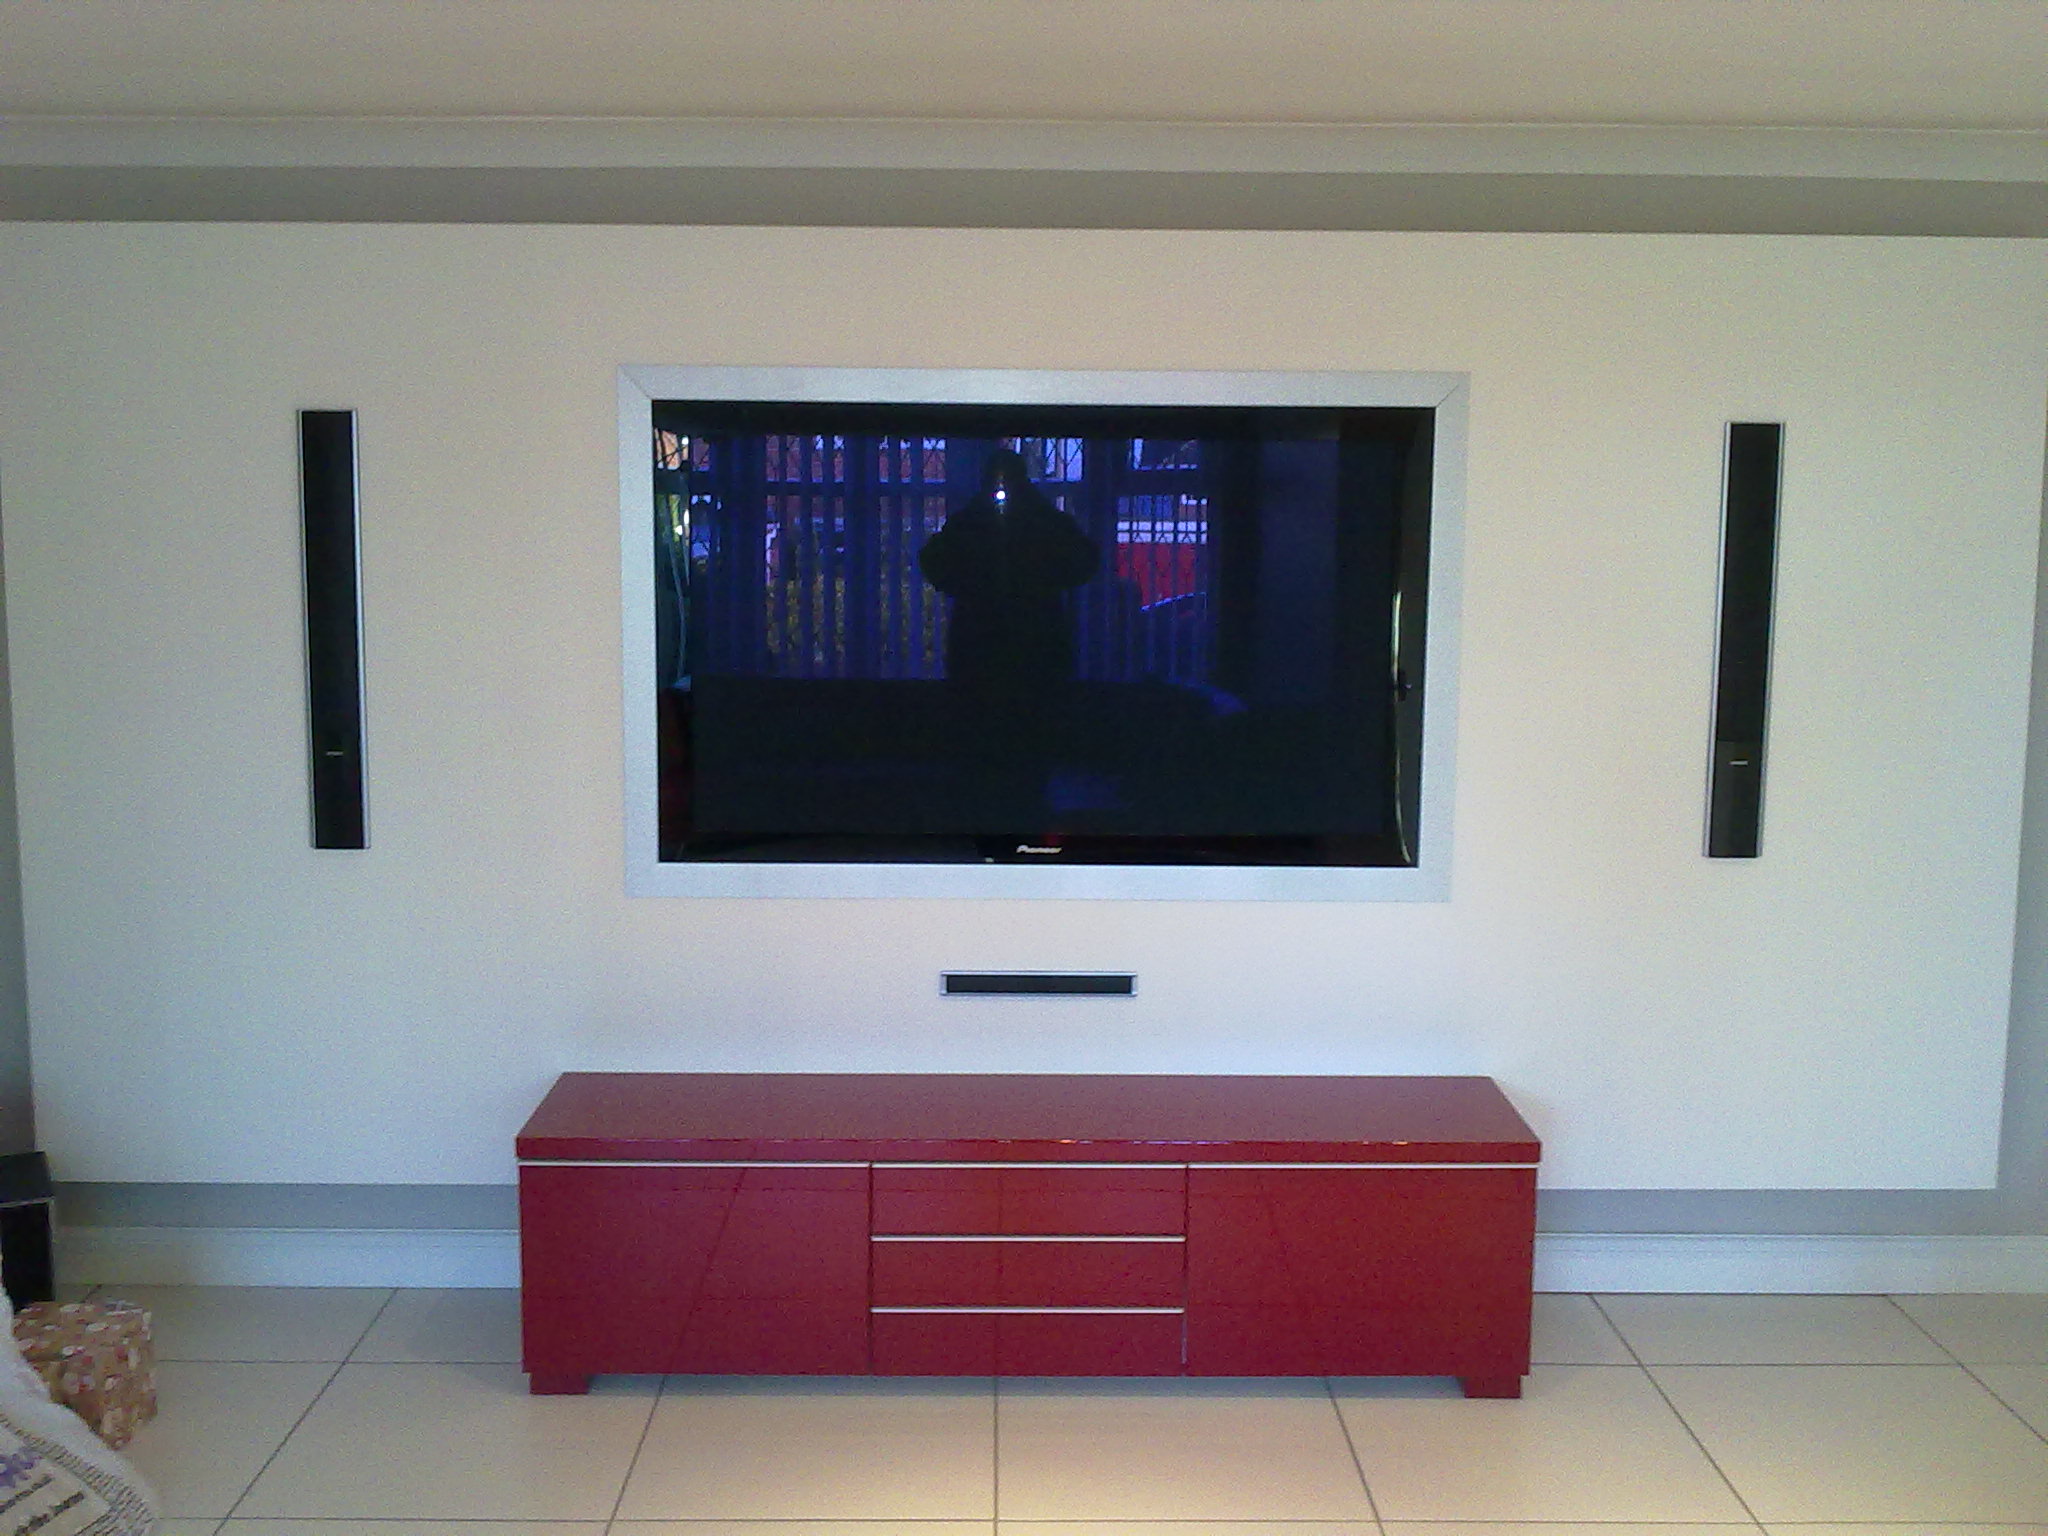 Pics of wall mounted tv/av set up please - Page 2 - Home Cinema & Hi-Fi - PistonHeads